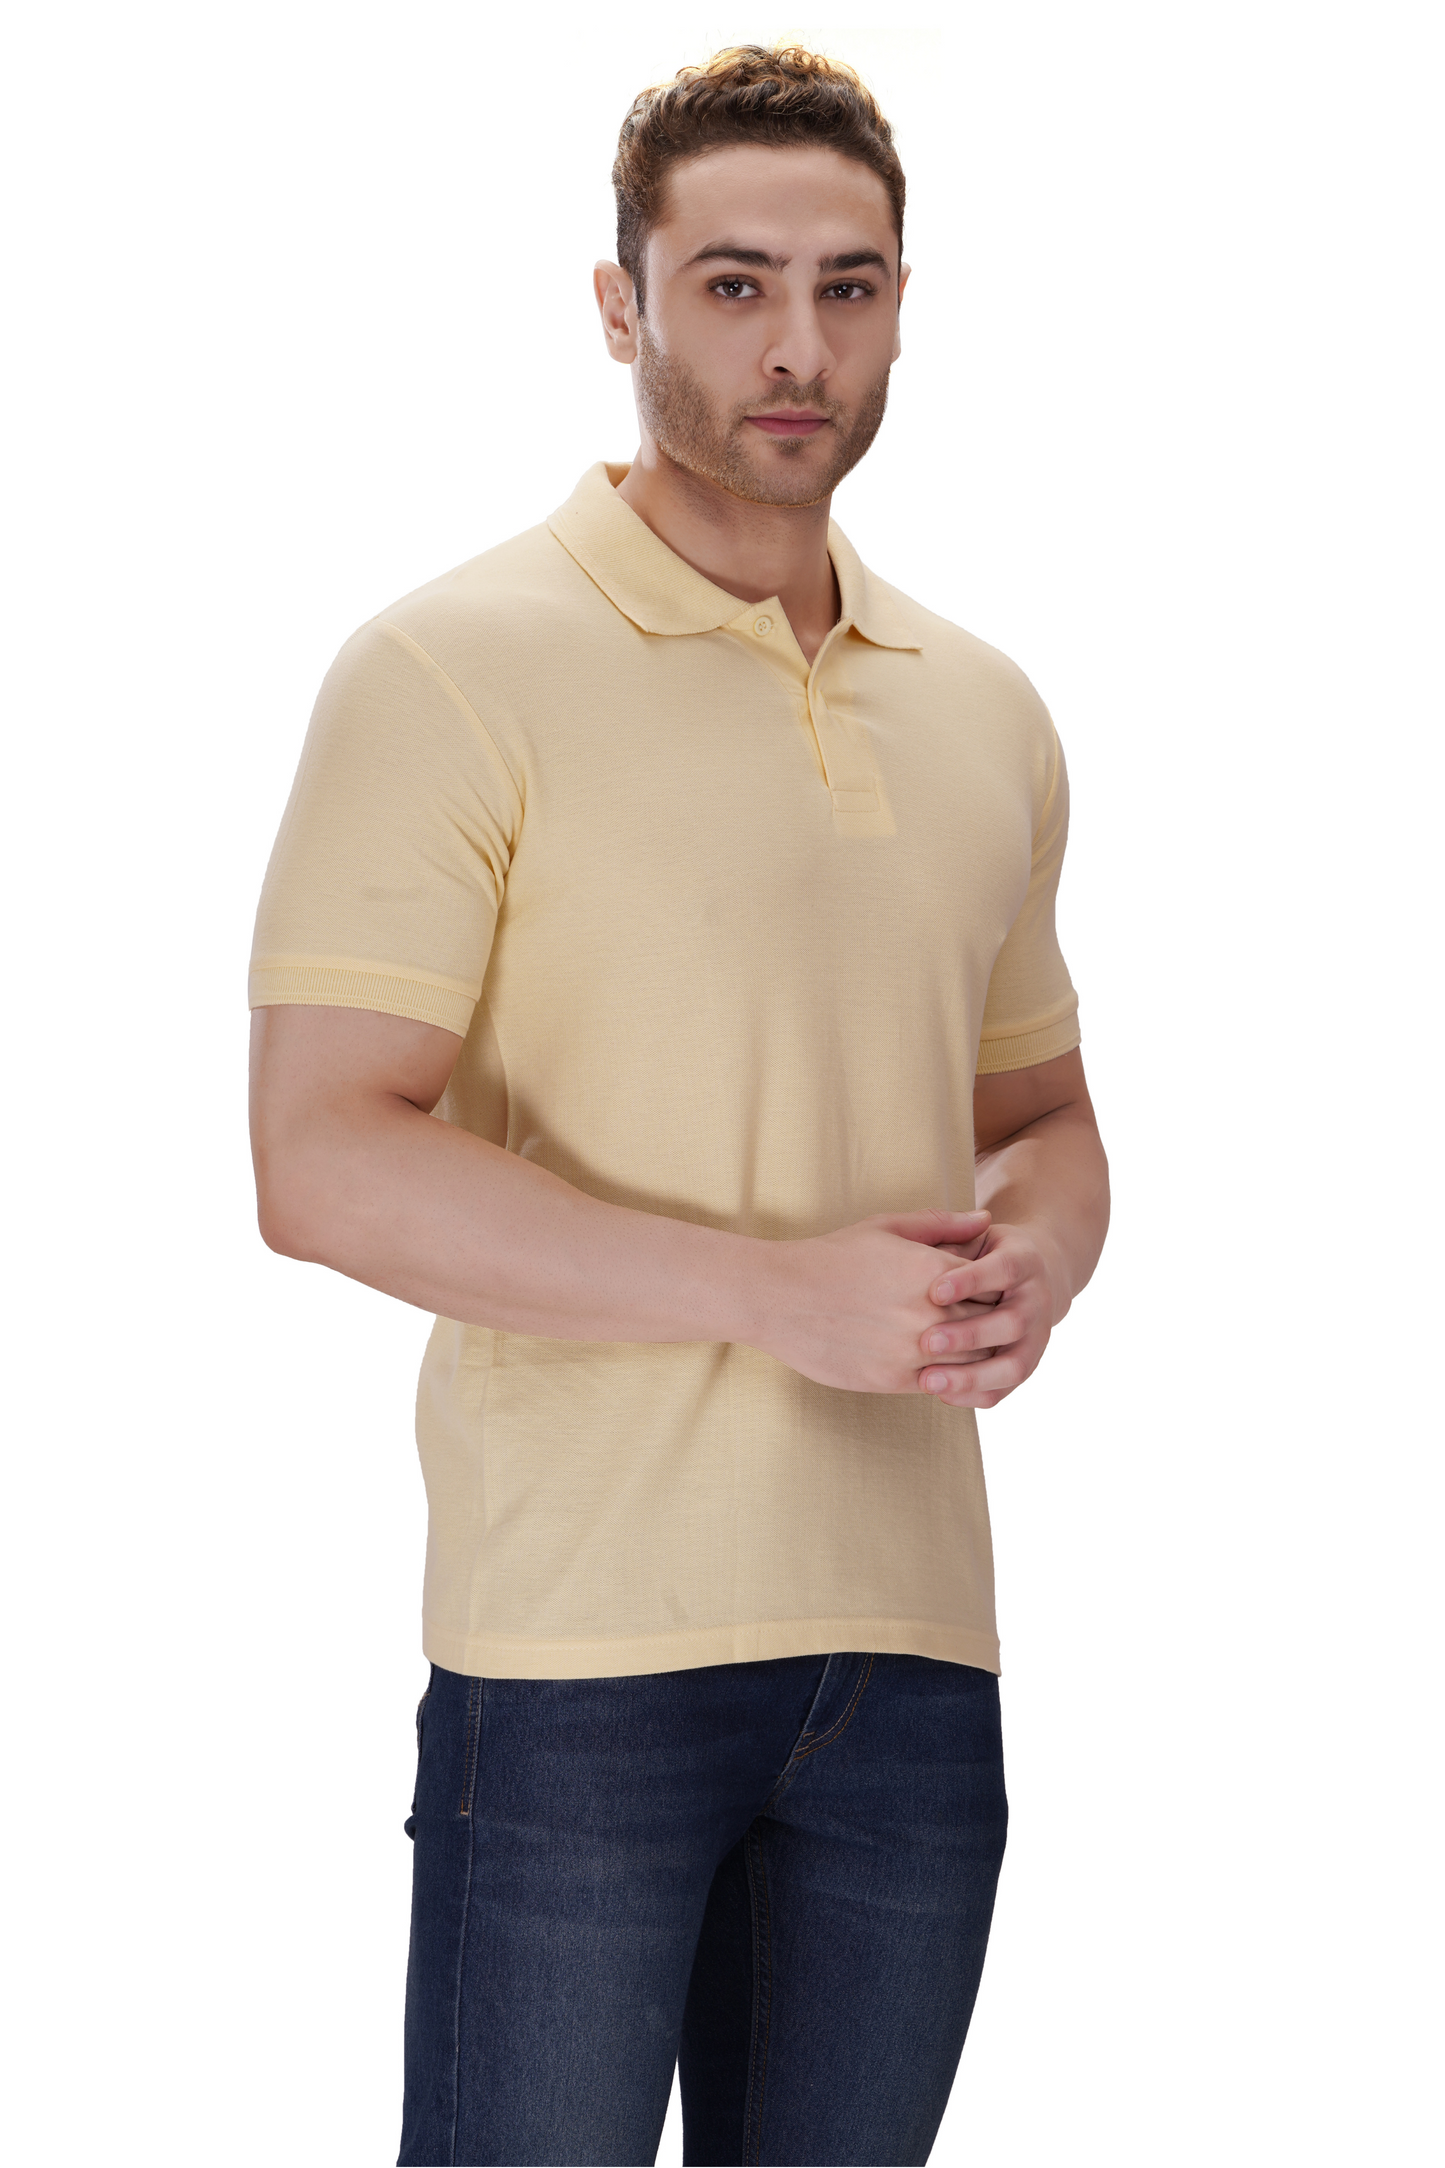 100% Cotton Men’s Half Sleeve Polo Neck T-Shirt - Half White